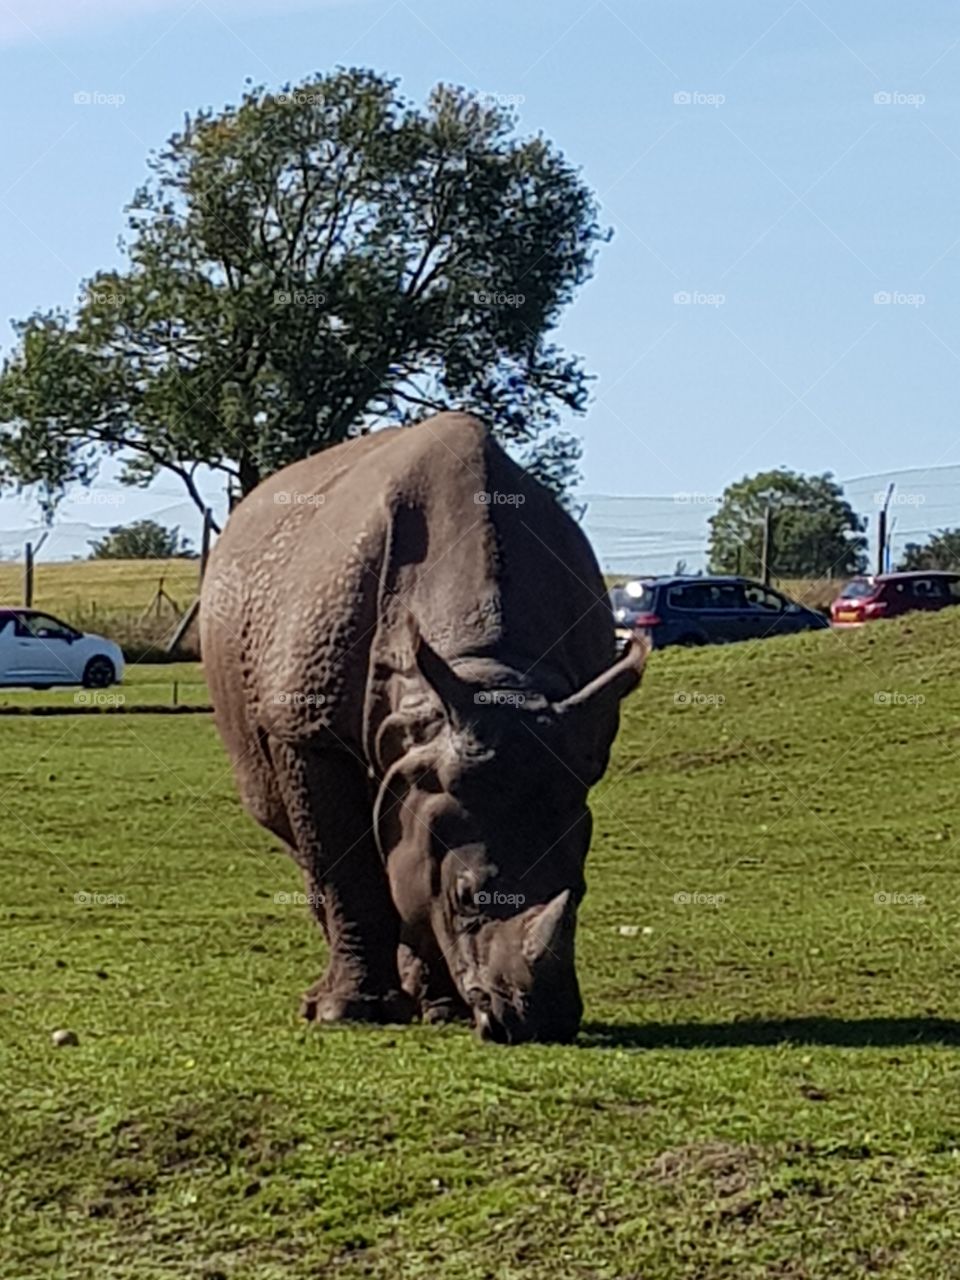 Rhino at Westmidlands safari park